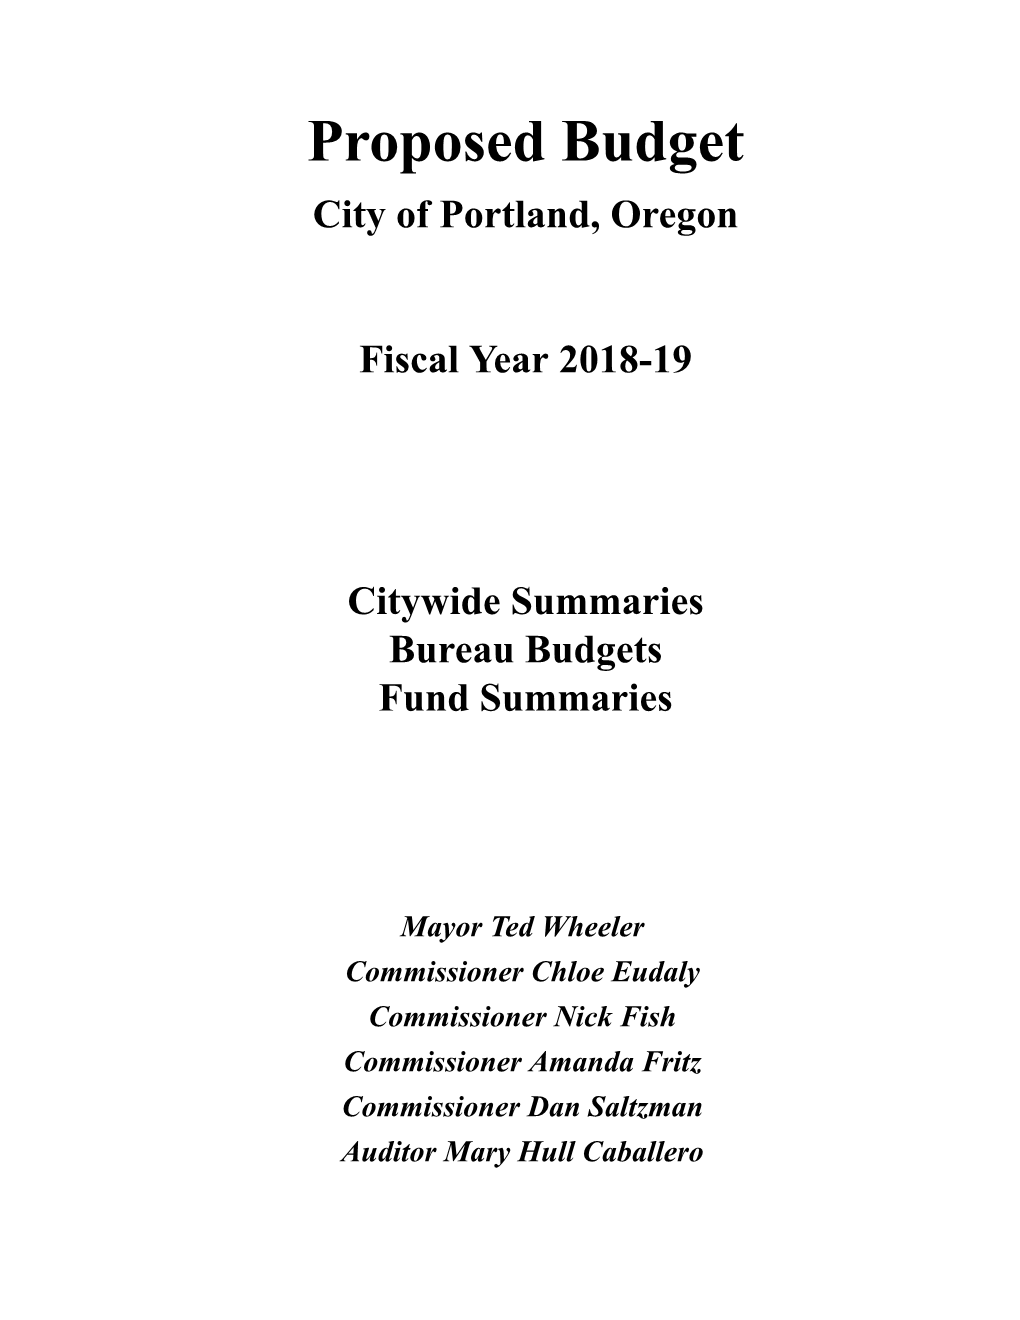 Proposed Budget City of Portland, Oregon